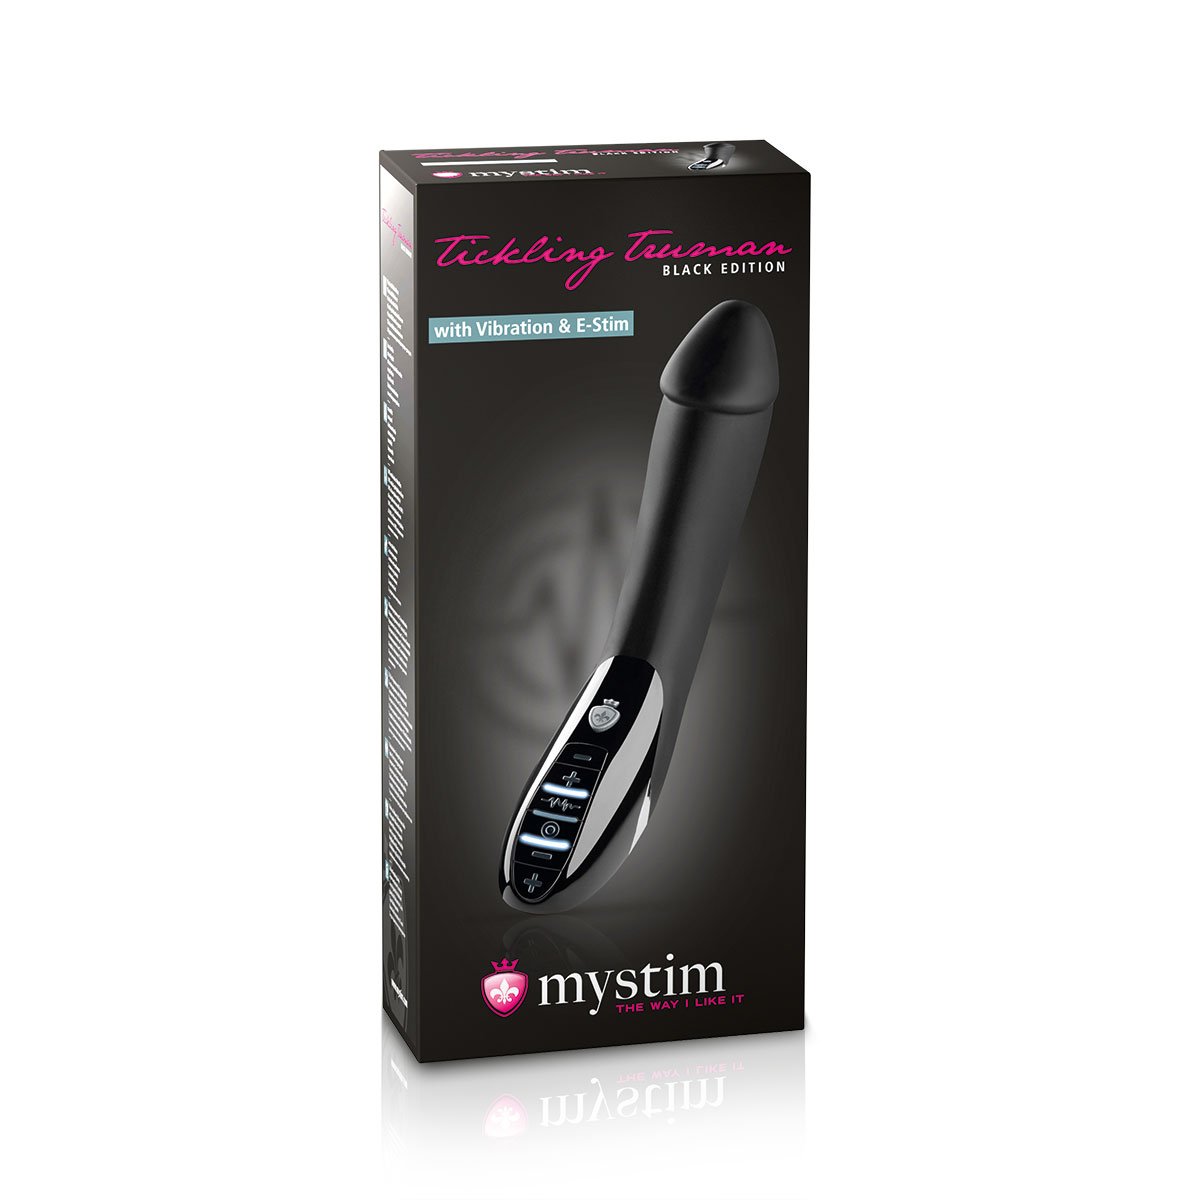 Mystim Tickling Truman E-Stim Vibrator - Buy At Luxury Toy X - Free 3-Day Shipping